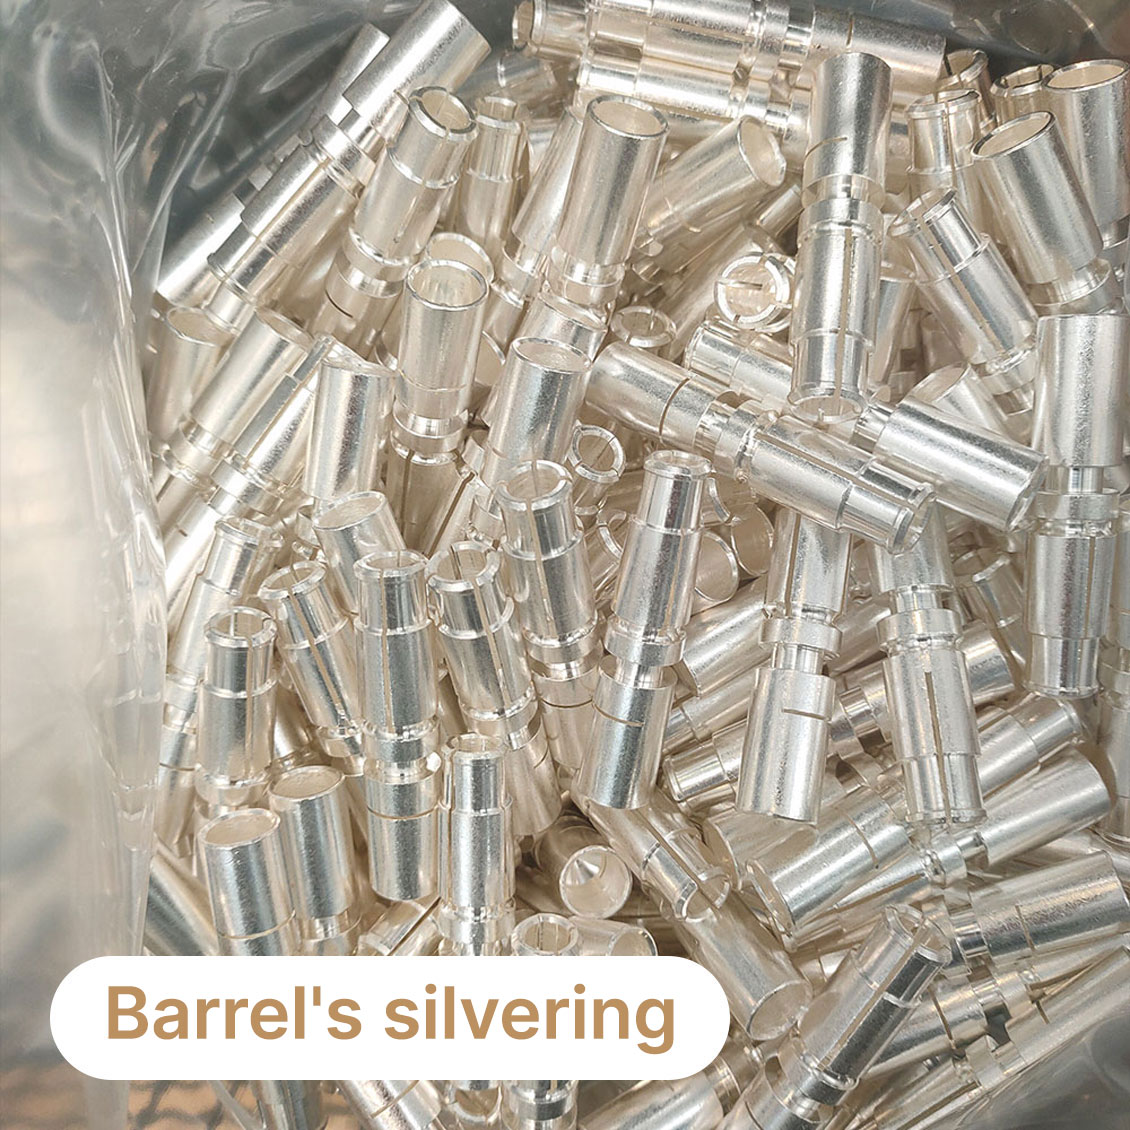 Barrel's silvering